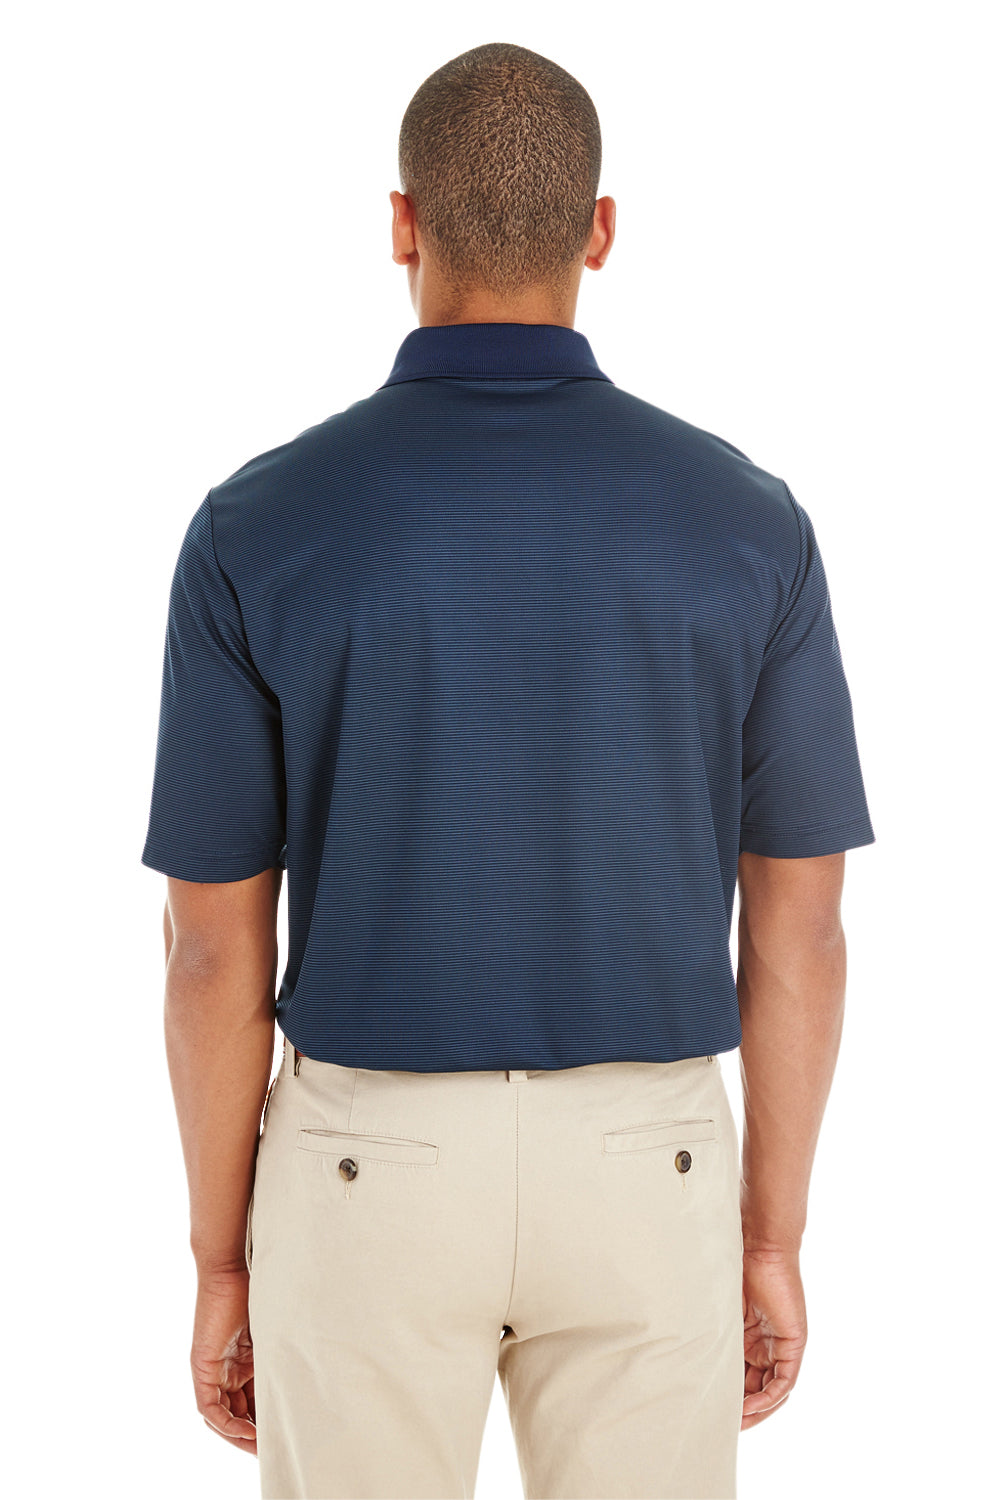 Core 365 CE102 Mens Express Performance Moisture Wicking Short Sleeve Polo Shirt Navy Blue Back